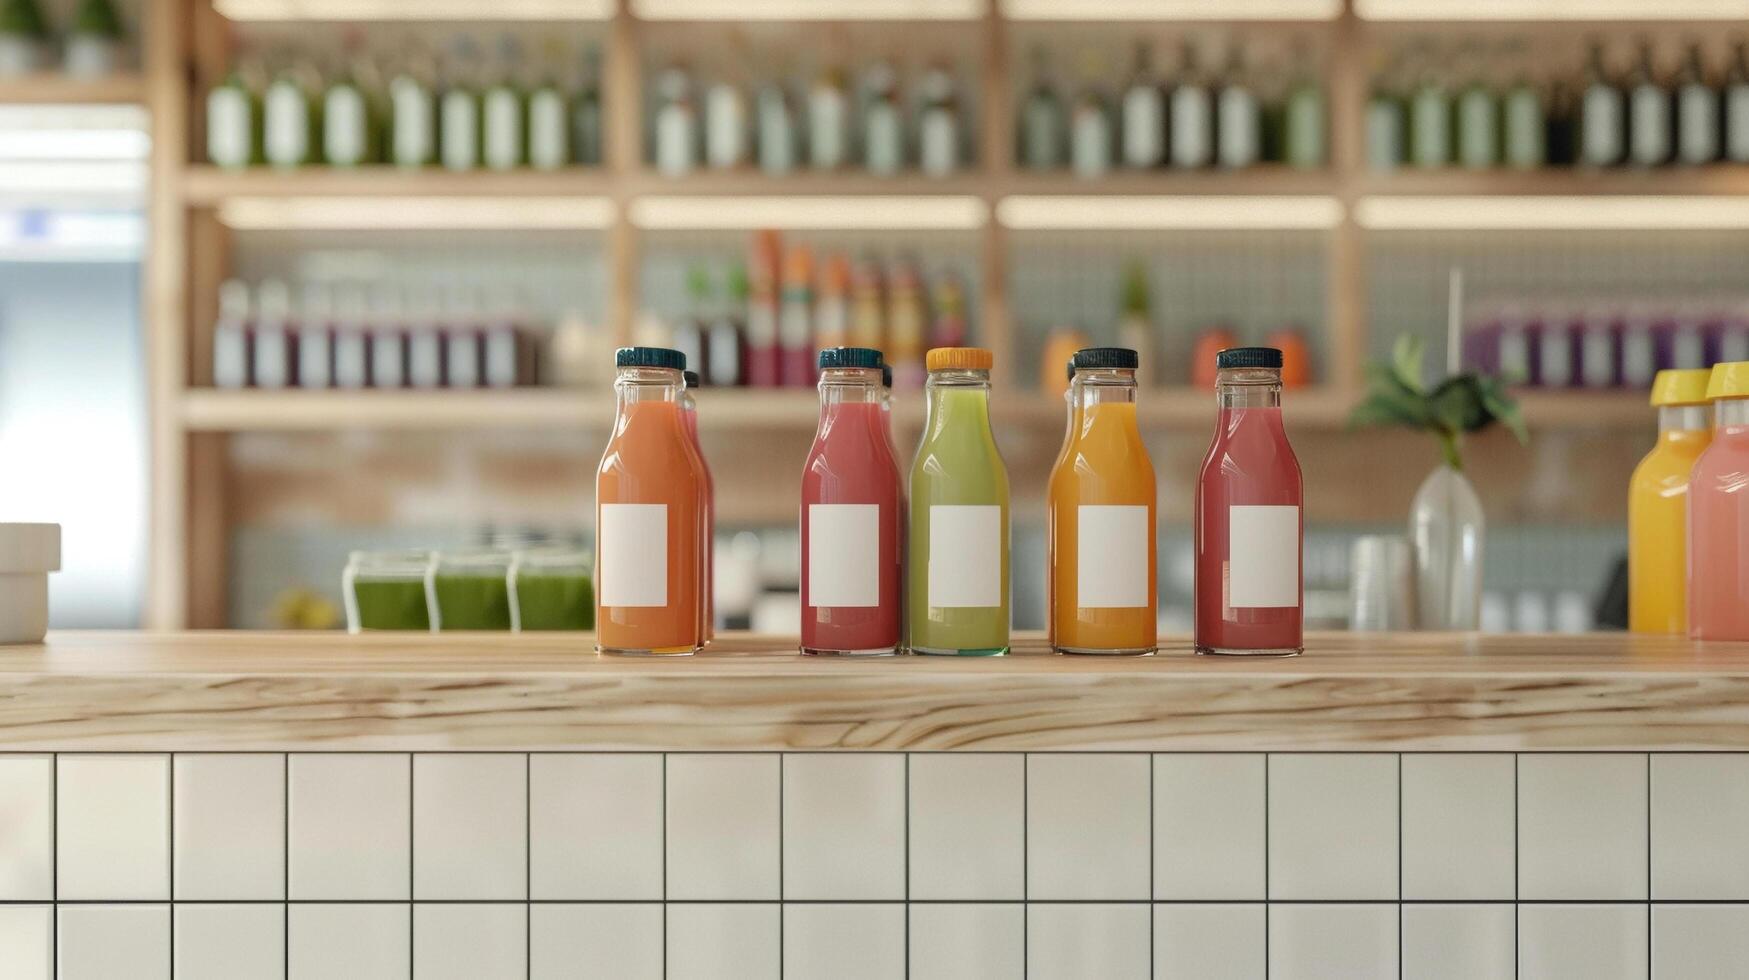 Cold press juice bar counter with blank bottle mockups for fresh juice blends photo